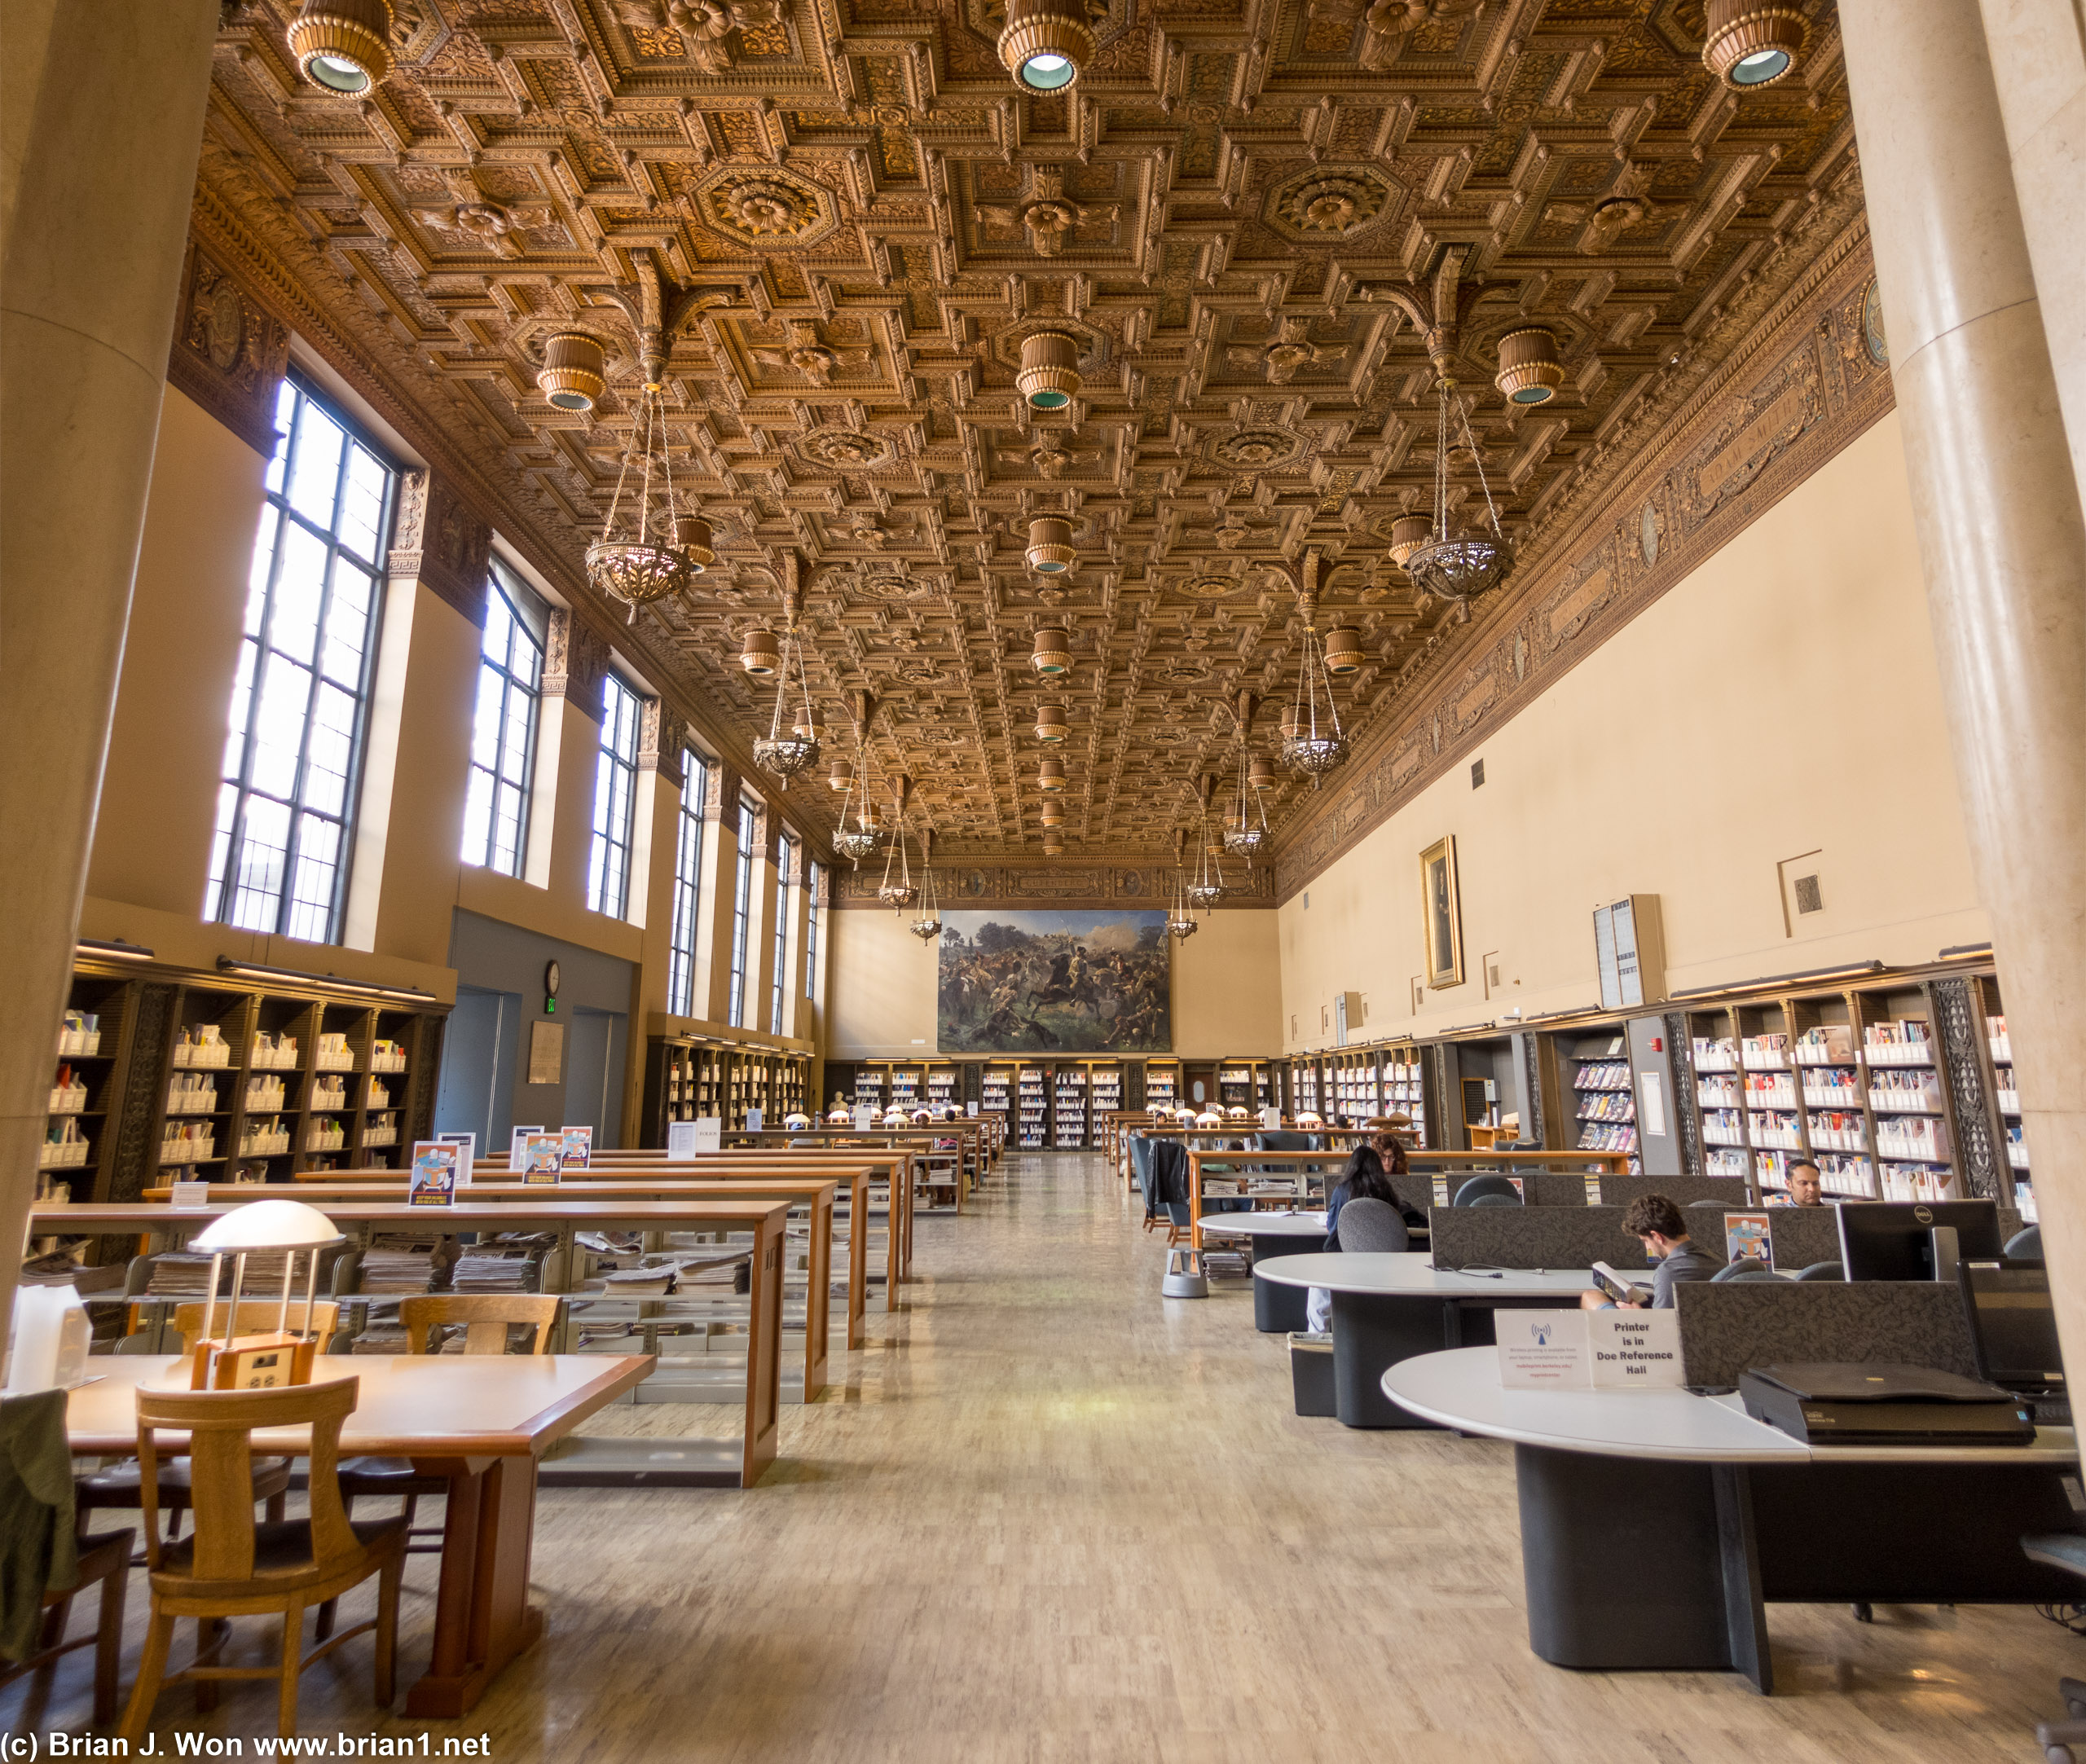 Inside Doe Memorial Library.